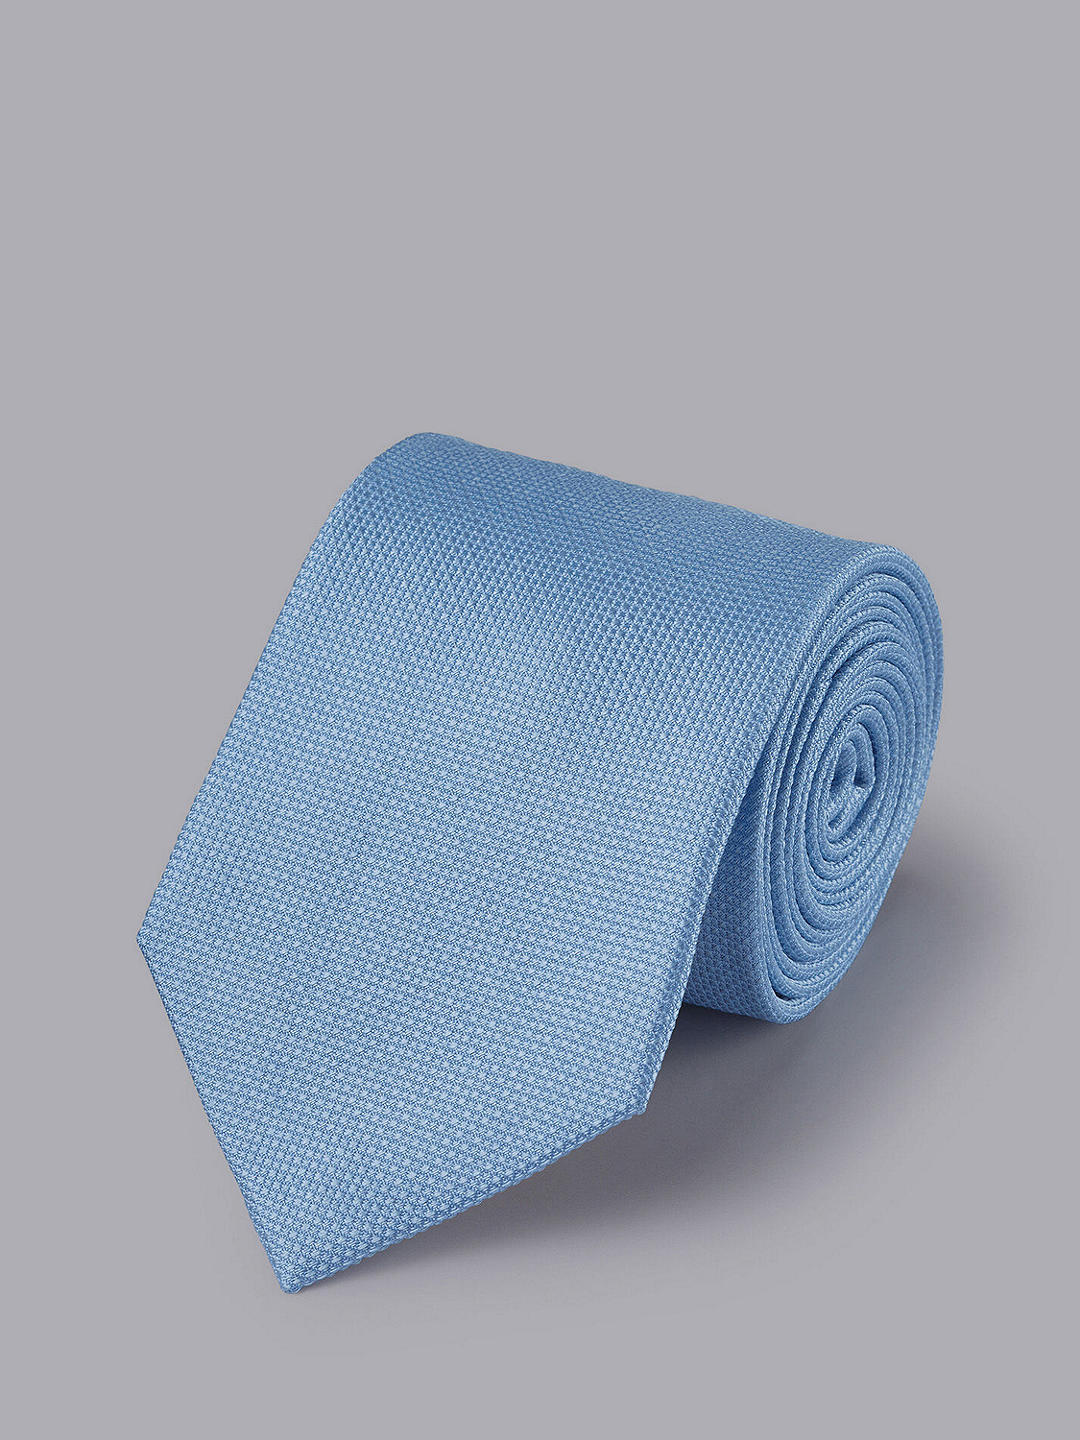 Charles Tyrwhitt Stain Resistant Silk Tie, Sky Blue